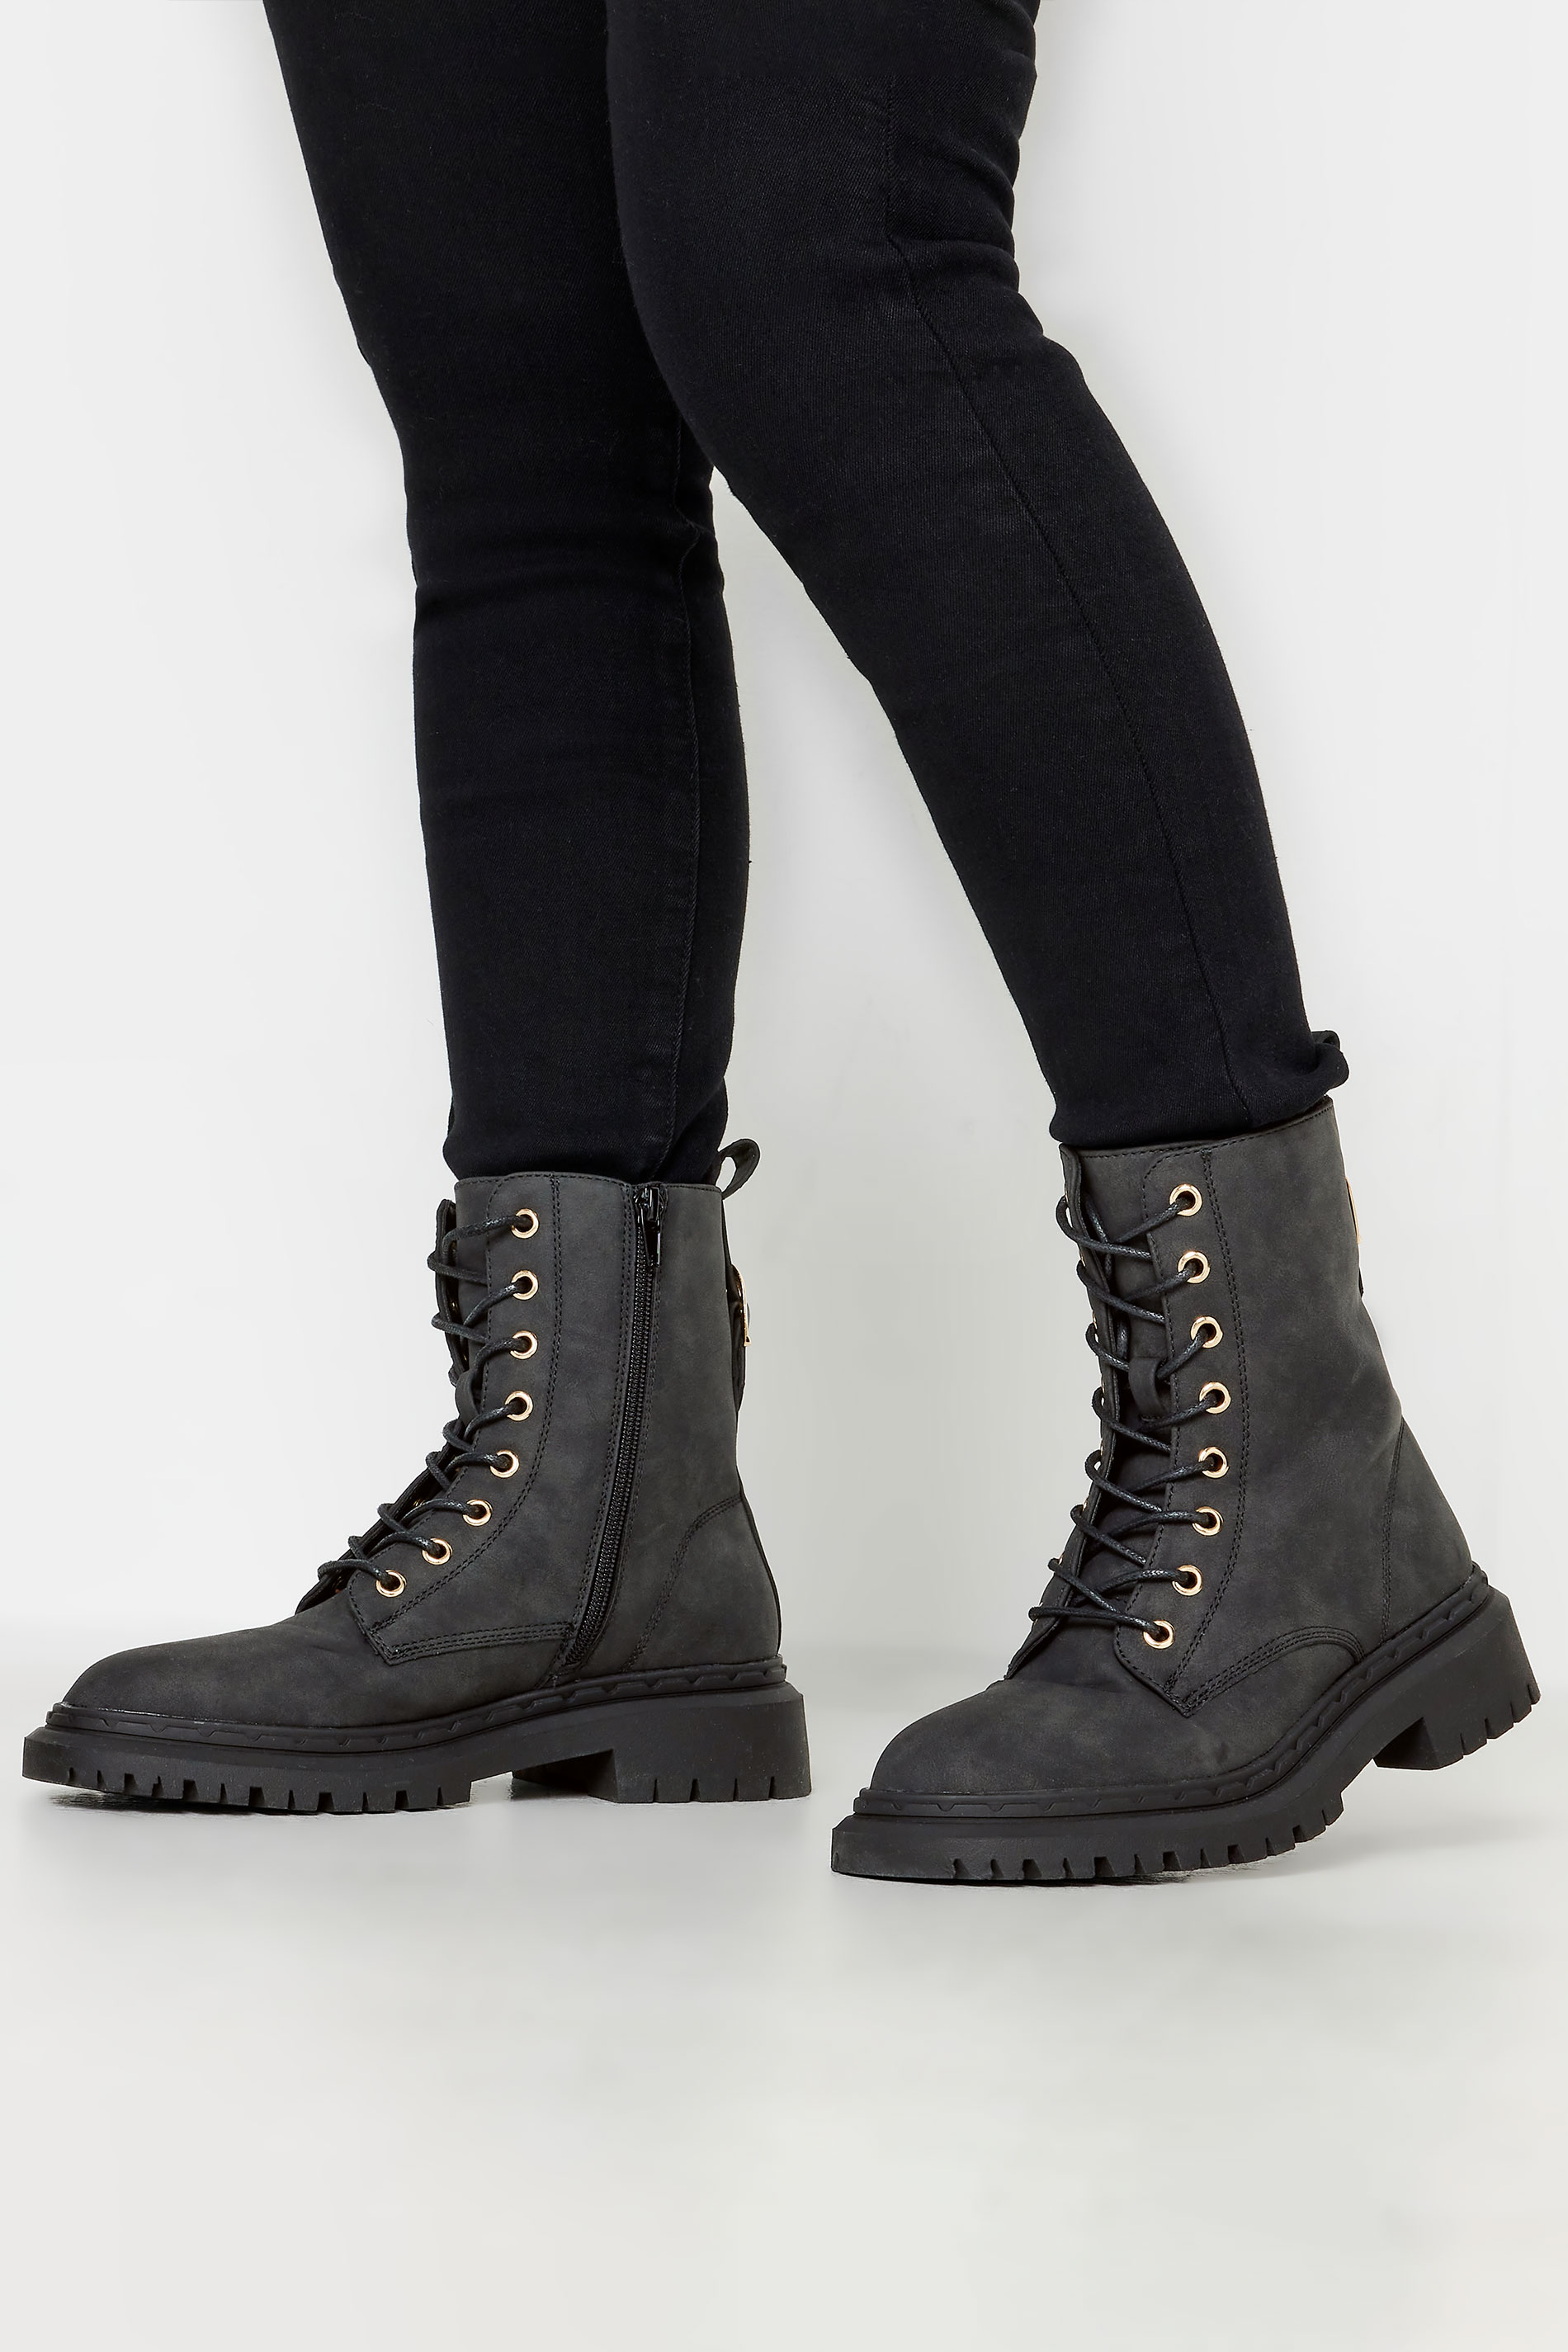 PixieGirl Black Chunky Lace Up Boots In Standard Fit | PixieGirl 1